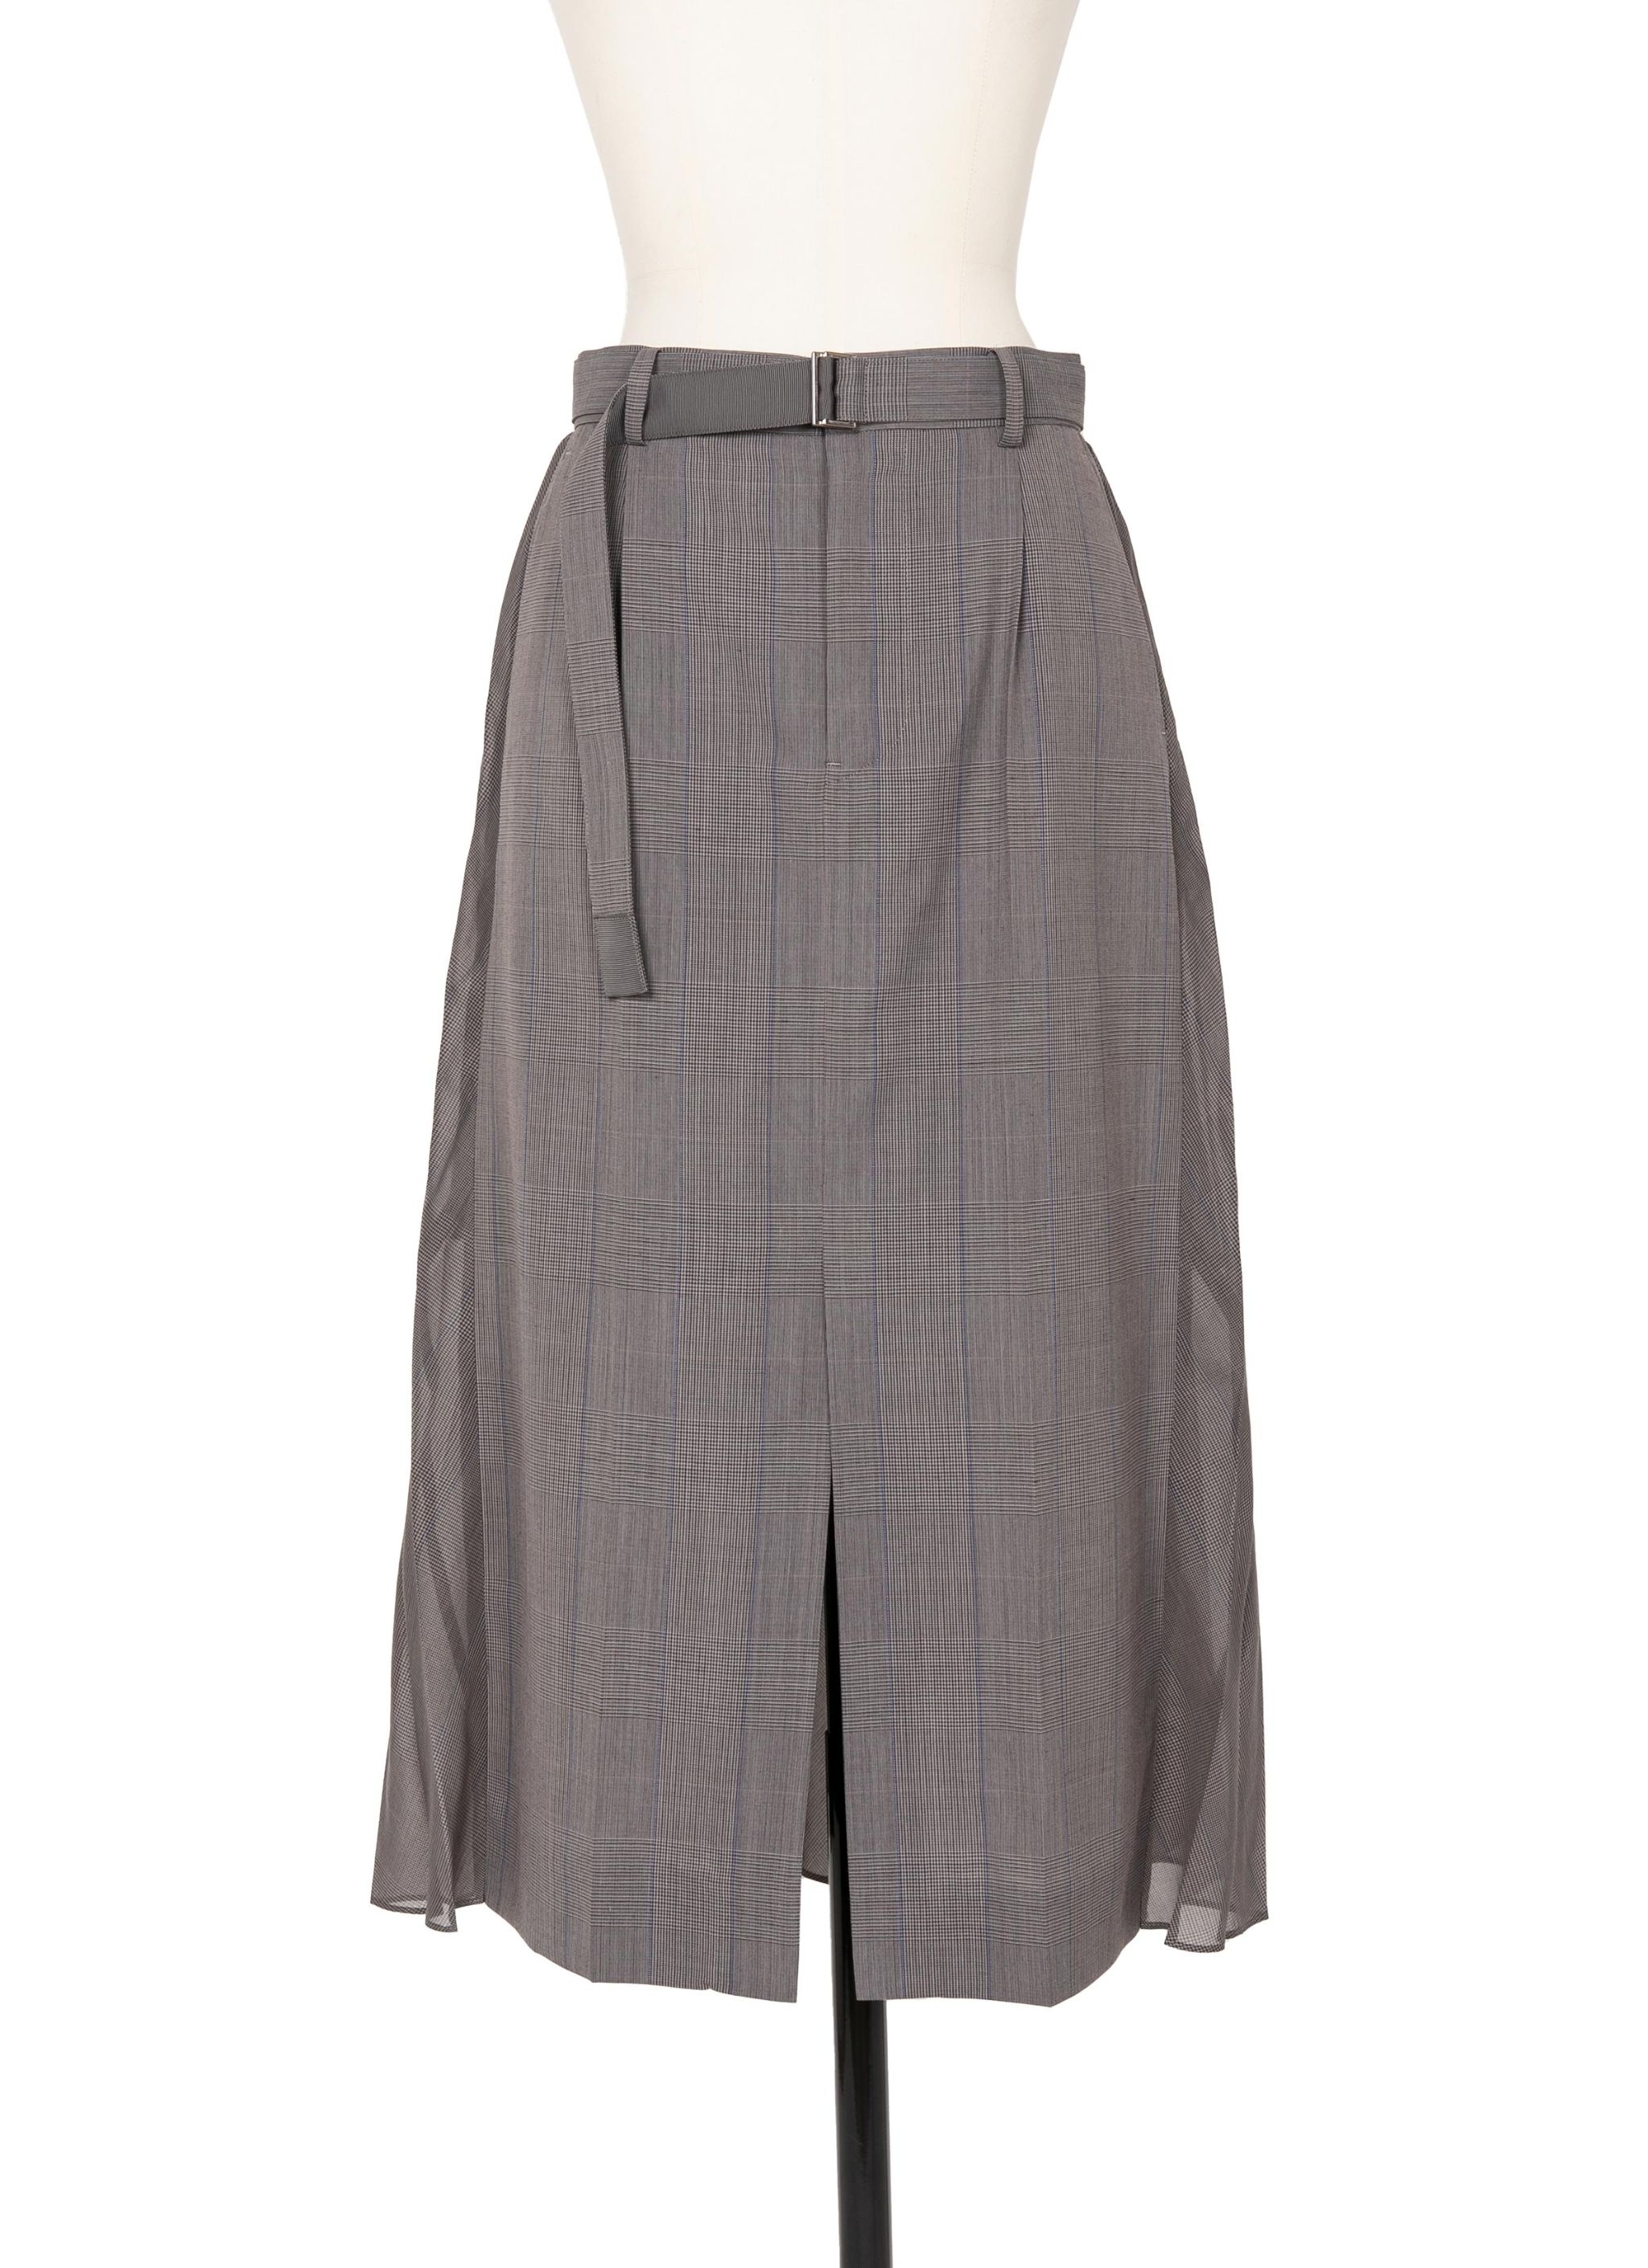 Chalk Stripe / Glencheck Skirt - 1